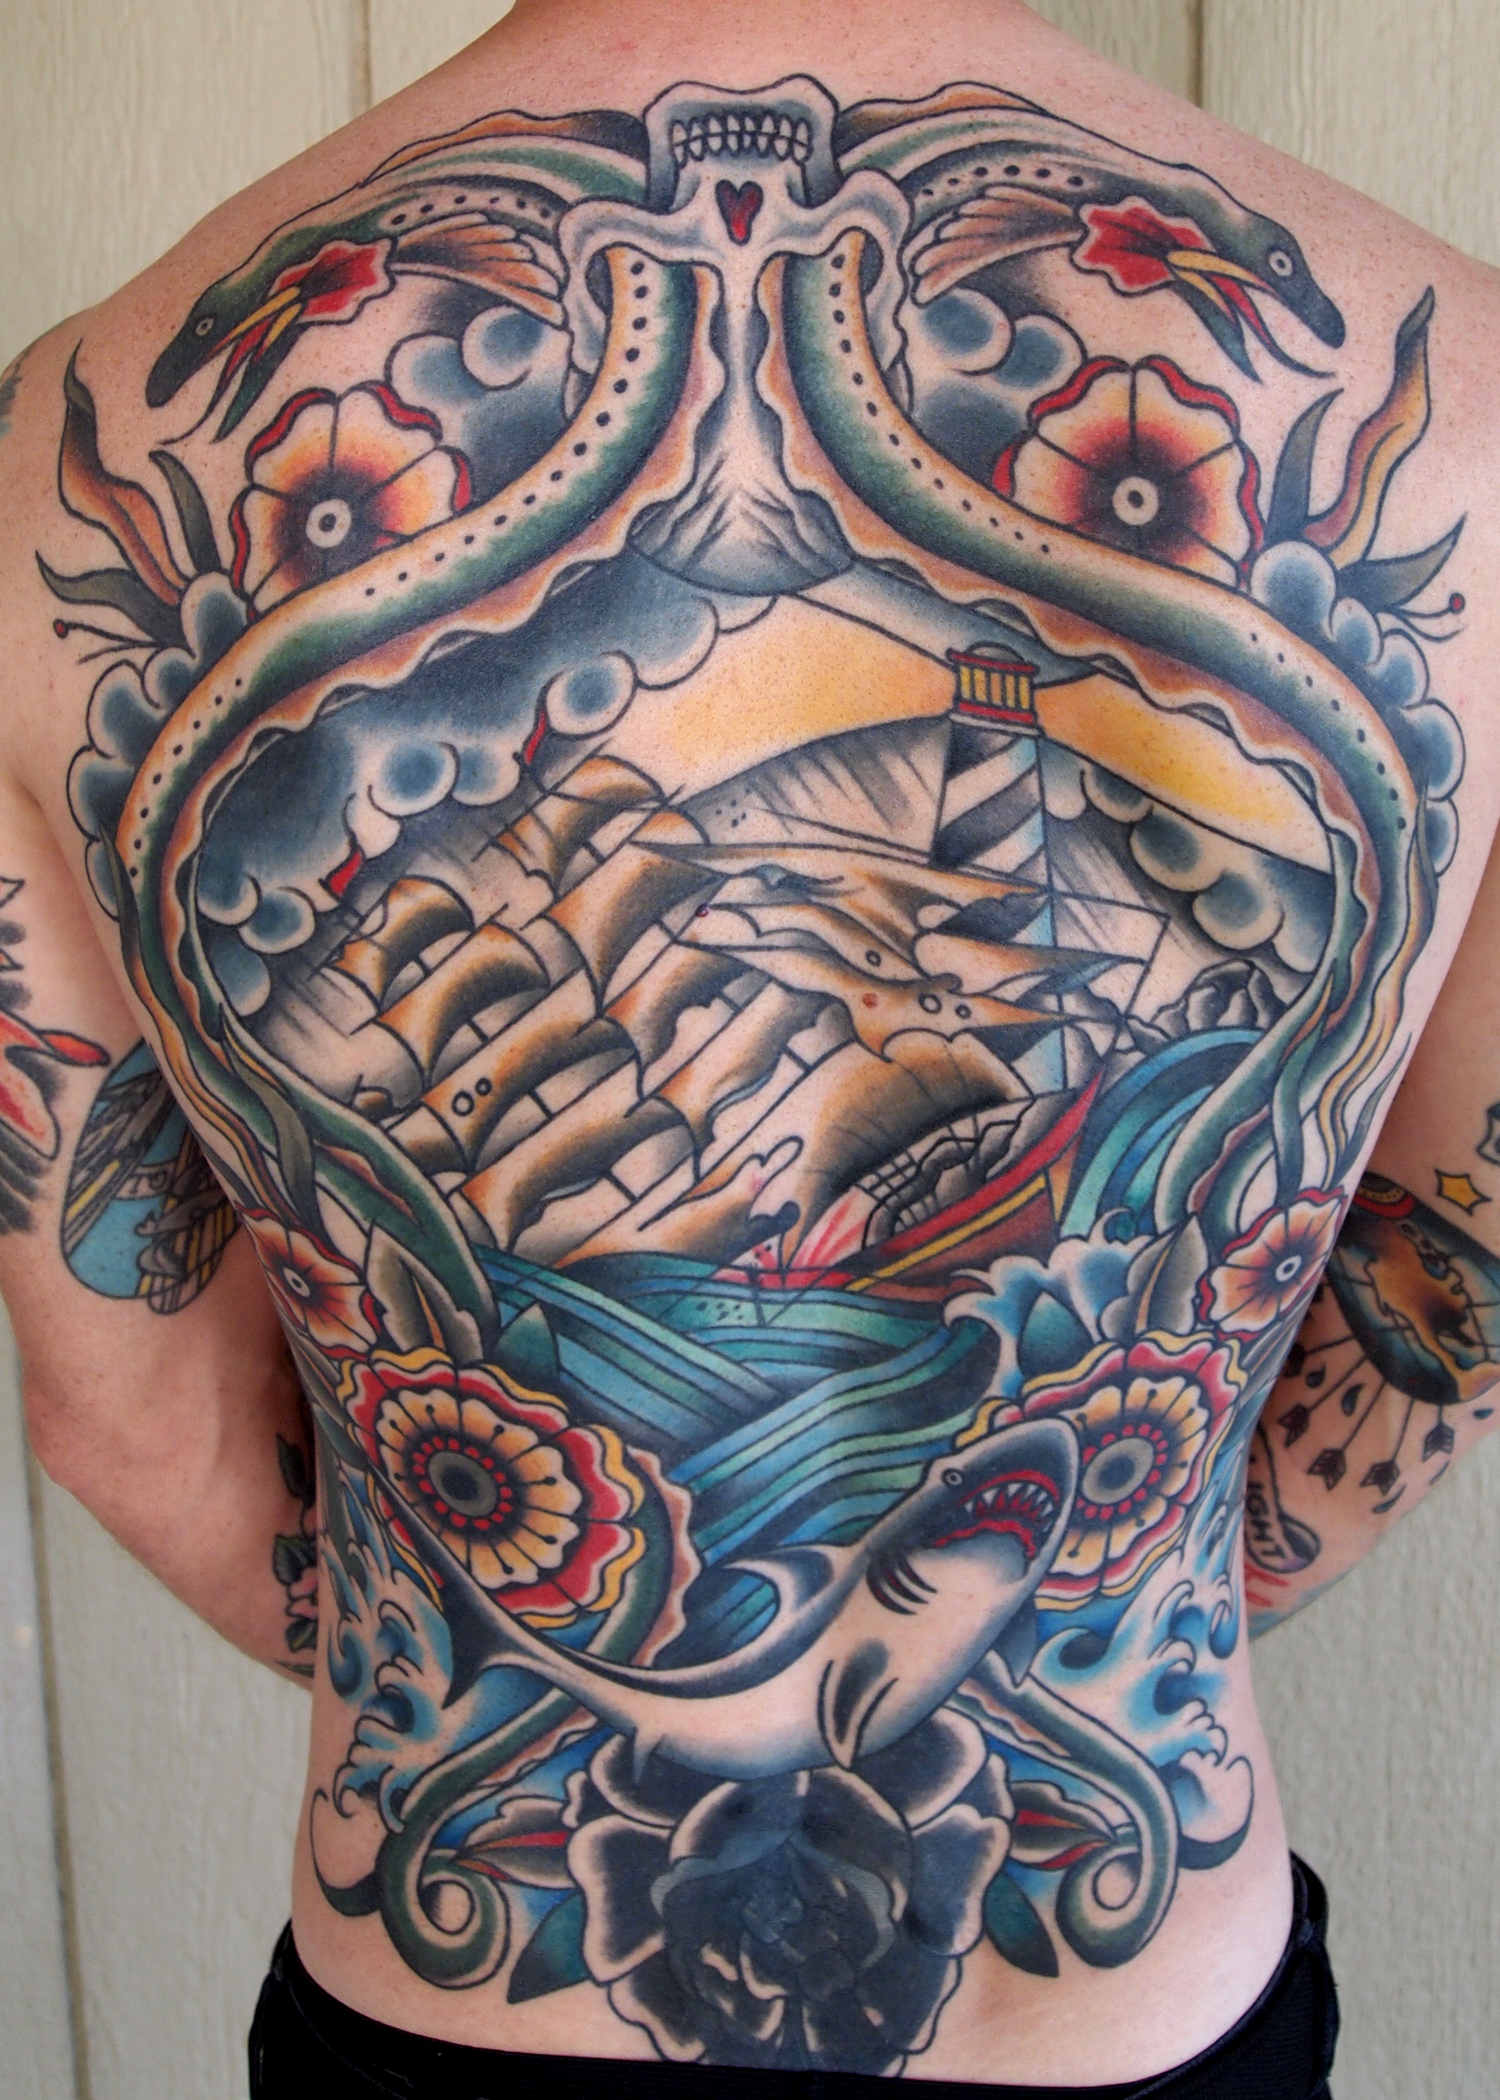 Luke Worley Tattoo Artist Good Graces Tattoo Wilmington Nc